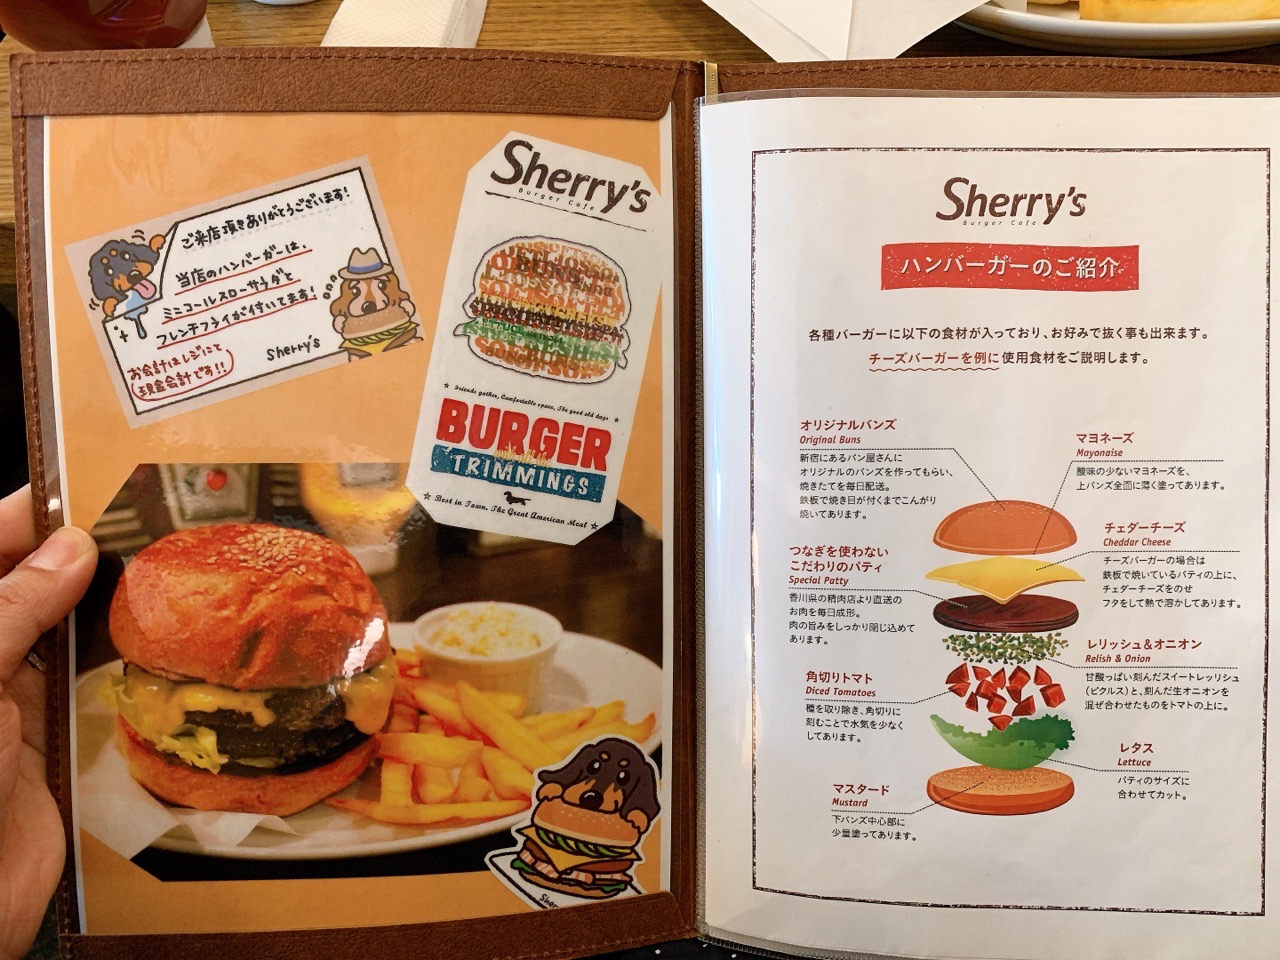 Sherry's Burger Cafeのハンバーガー紹介